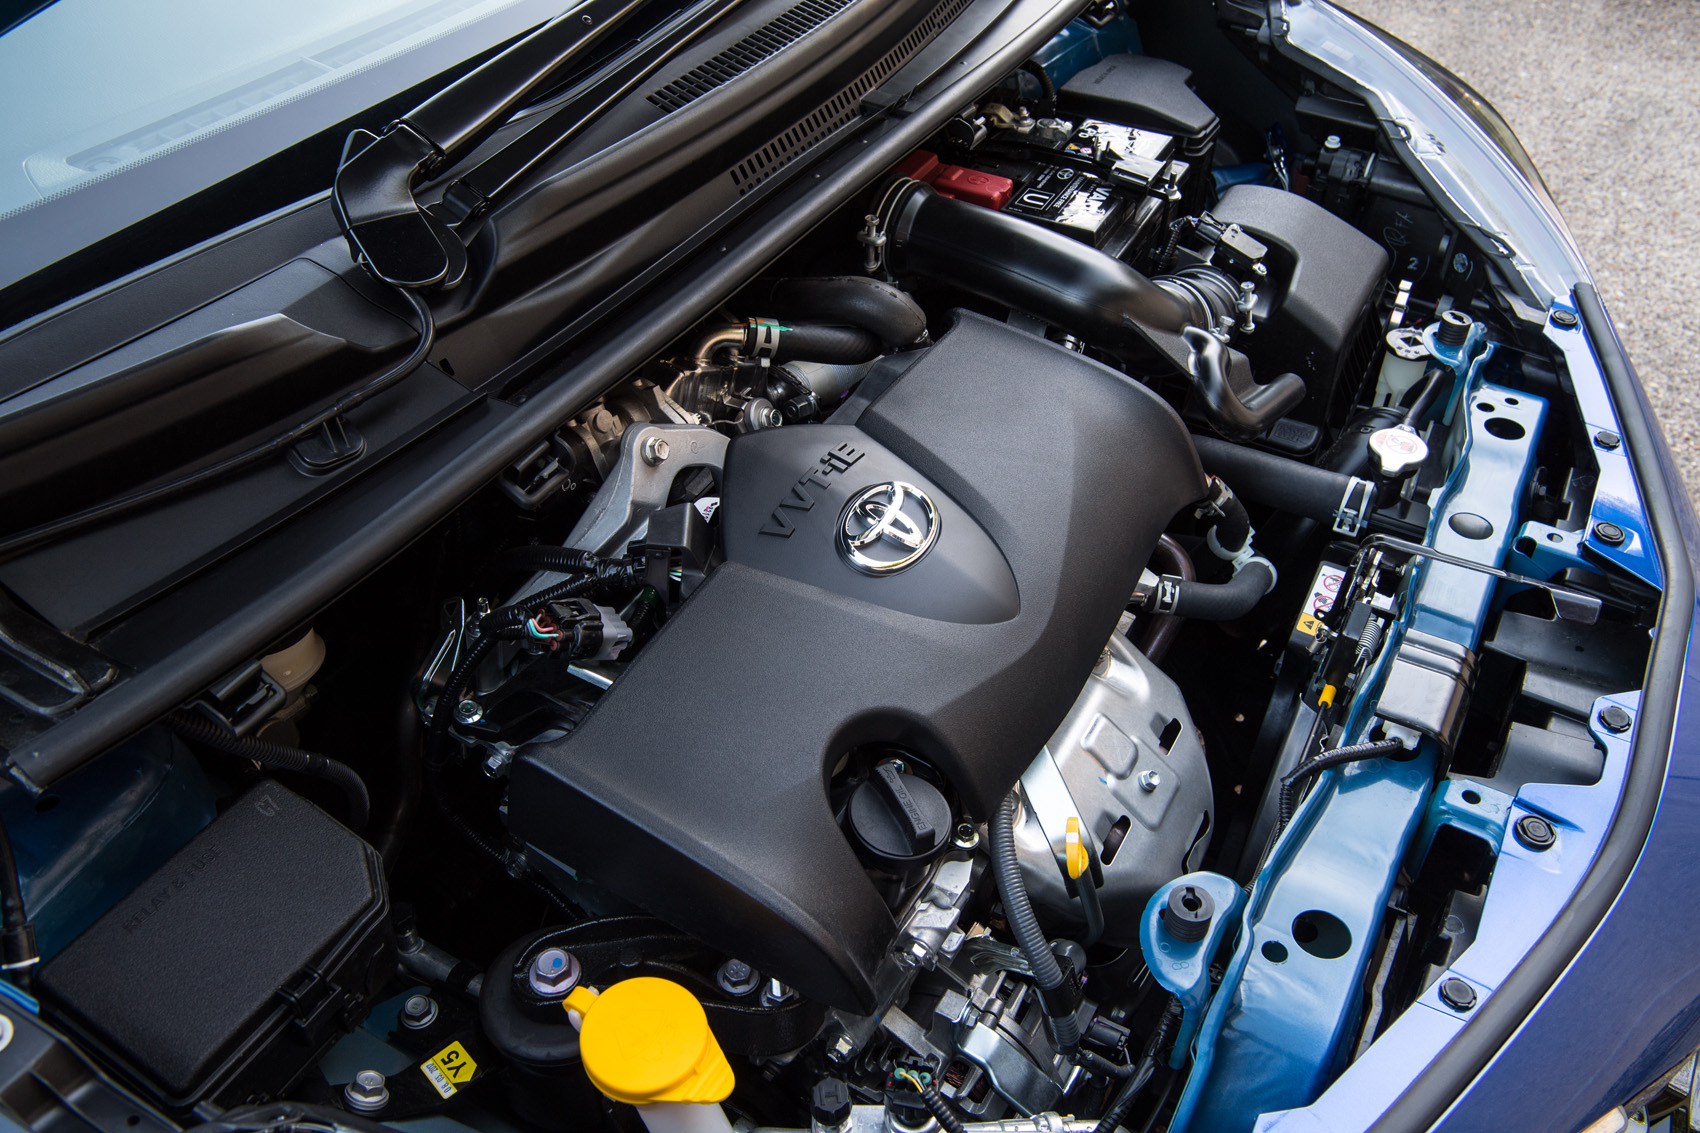 1.5-litre Toyota Yaris petrol engine